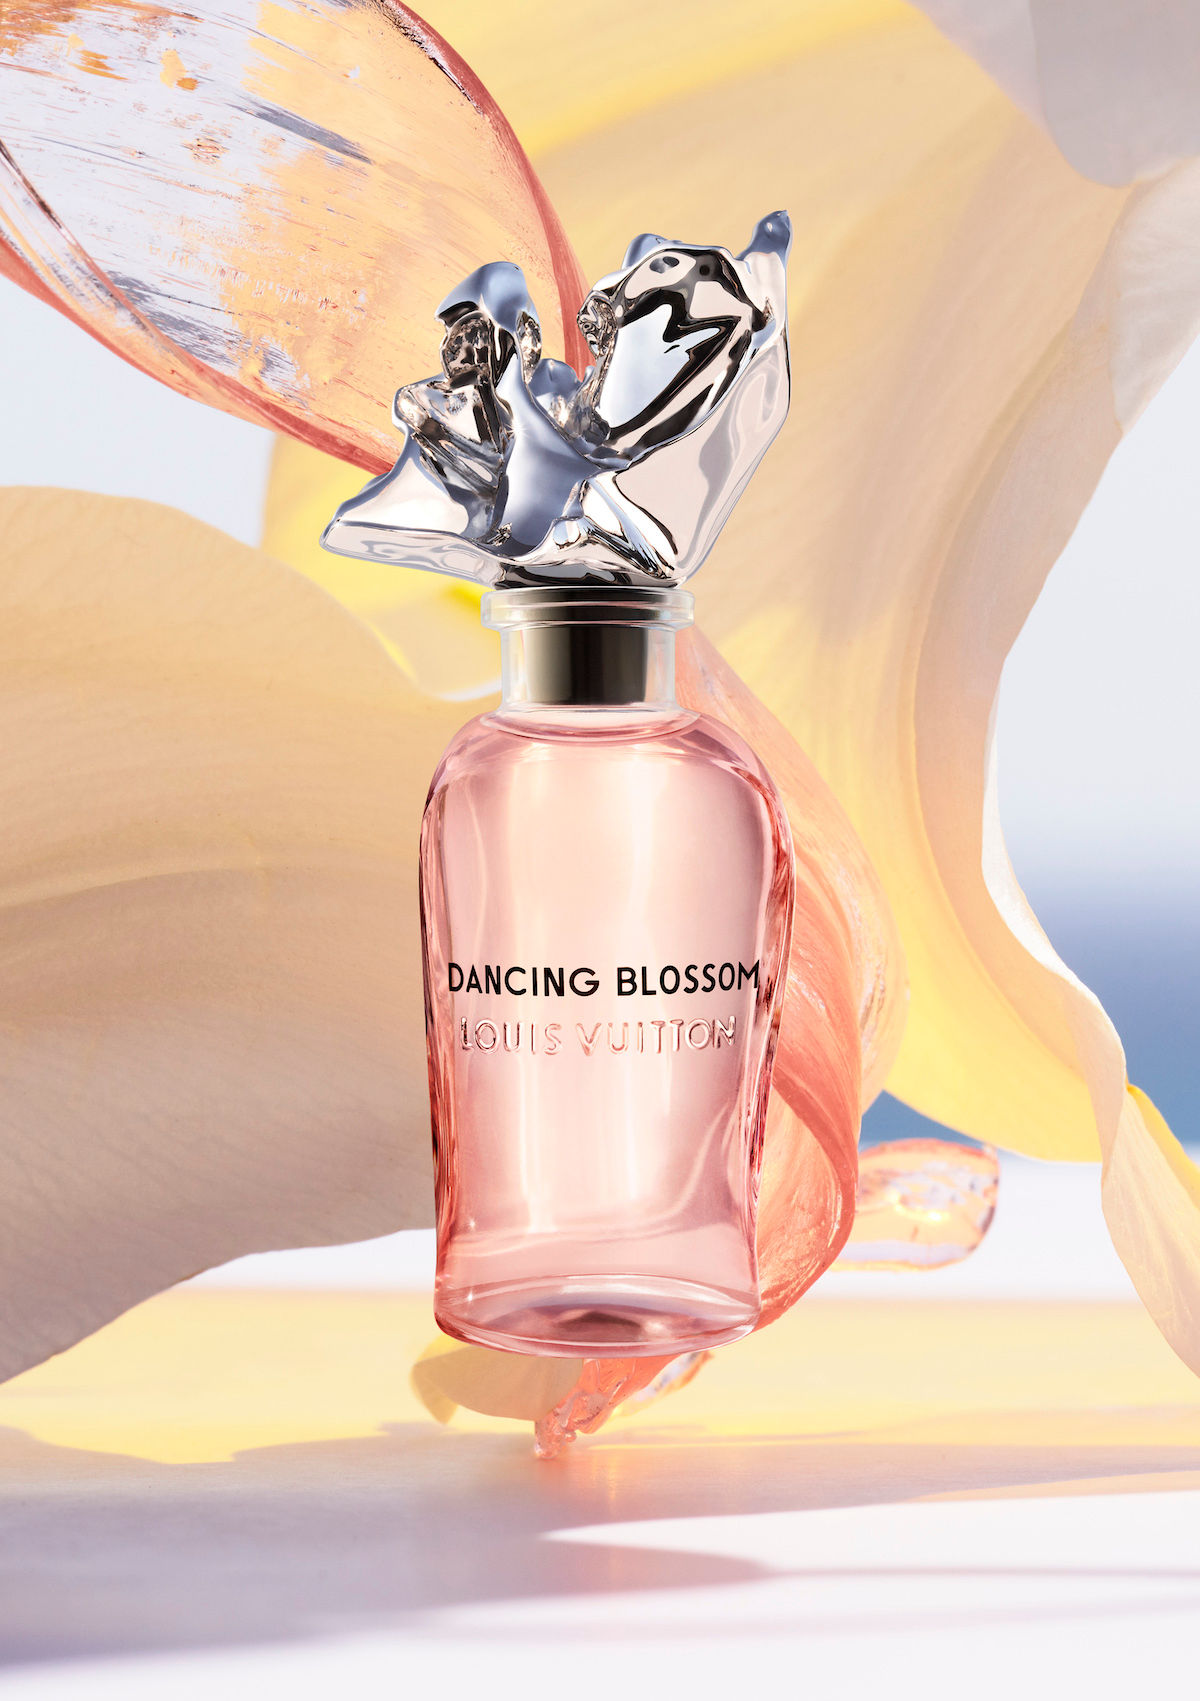 Louis Vuitton Les Parfums: Jacques Cavallier Belletrud Talks Perfume – The  Hollywood Reporter